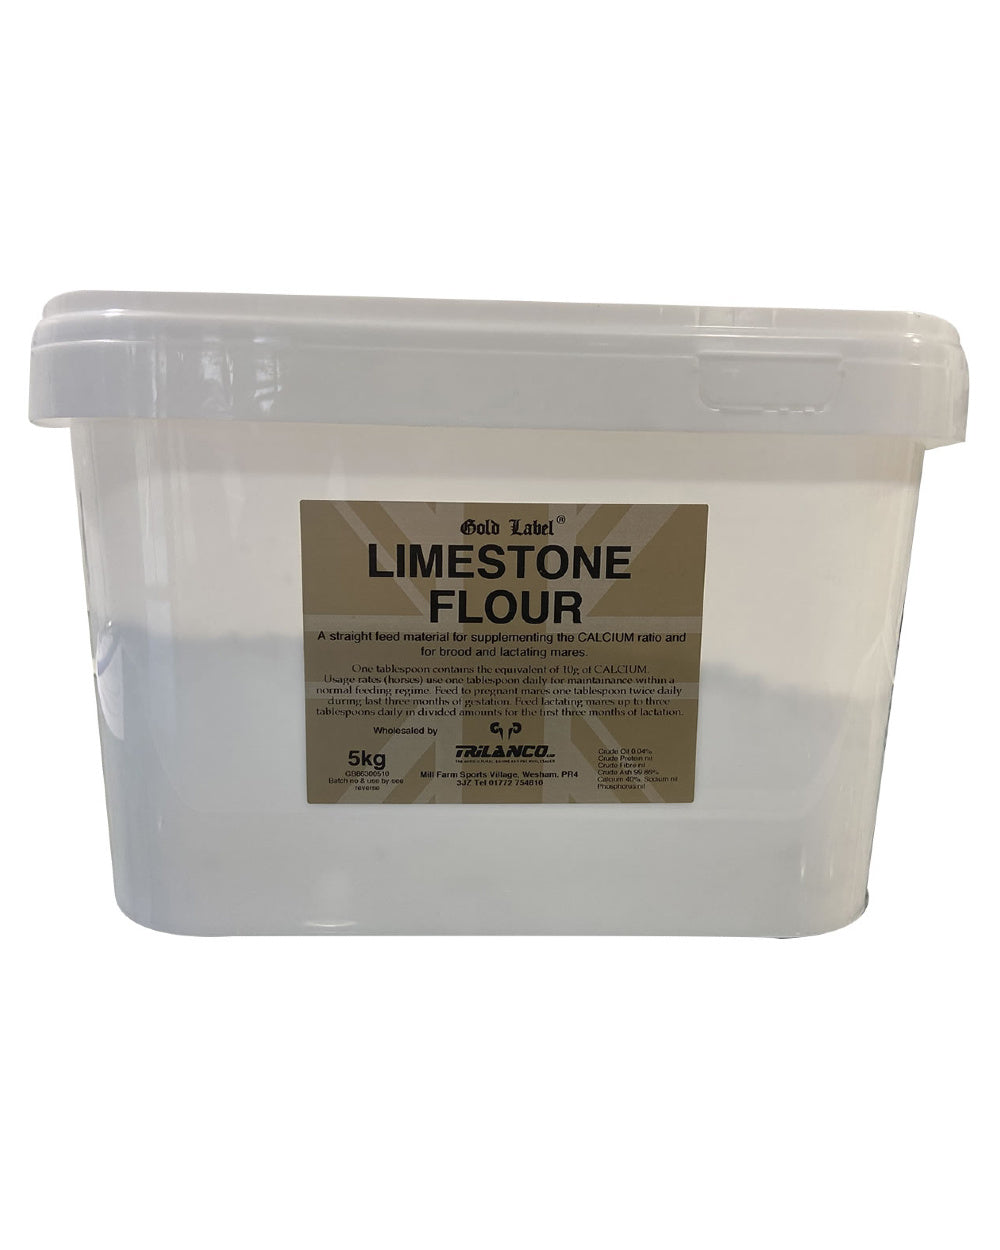 Gold Label Limestone Flour On A White Background